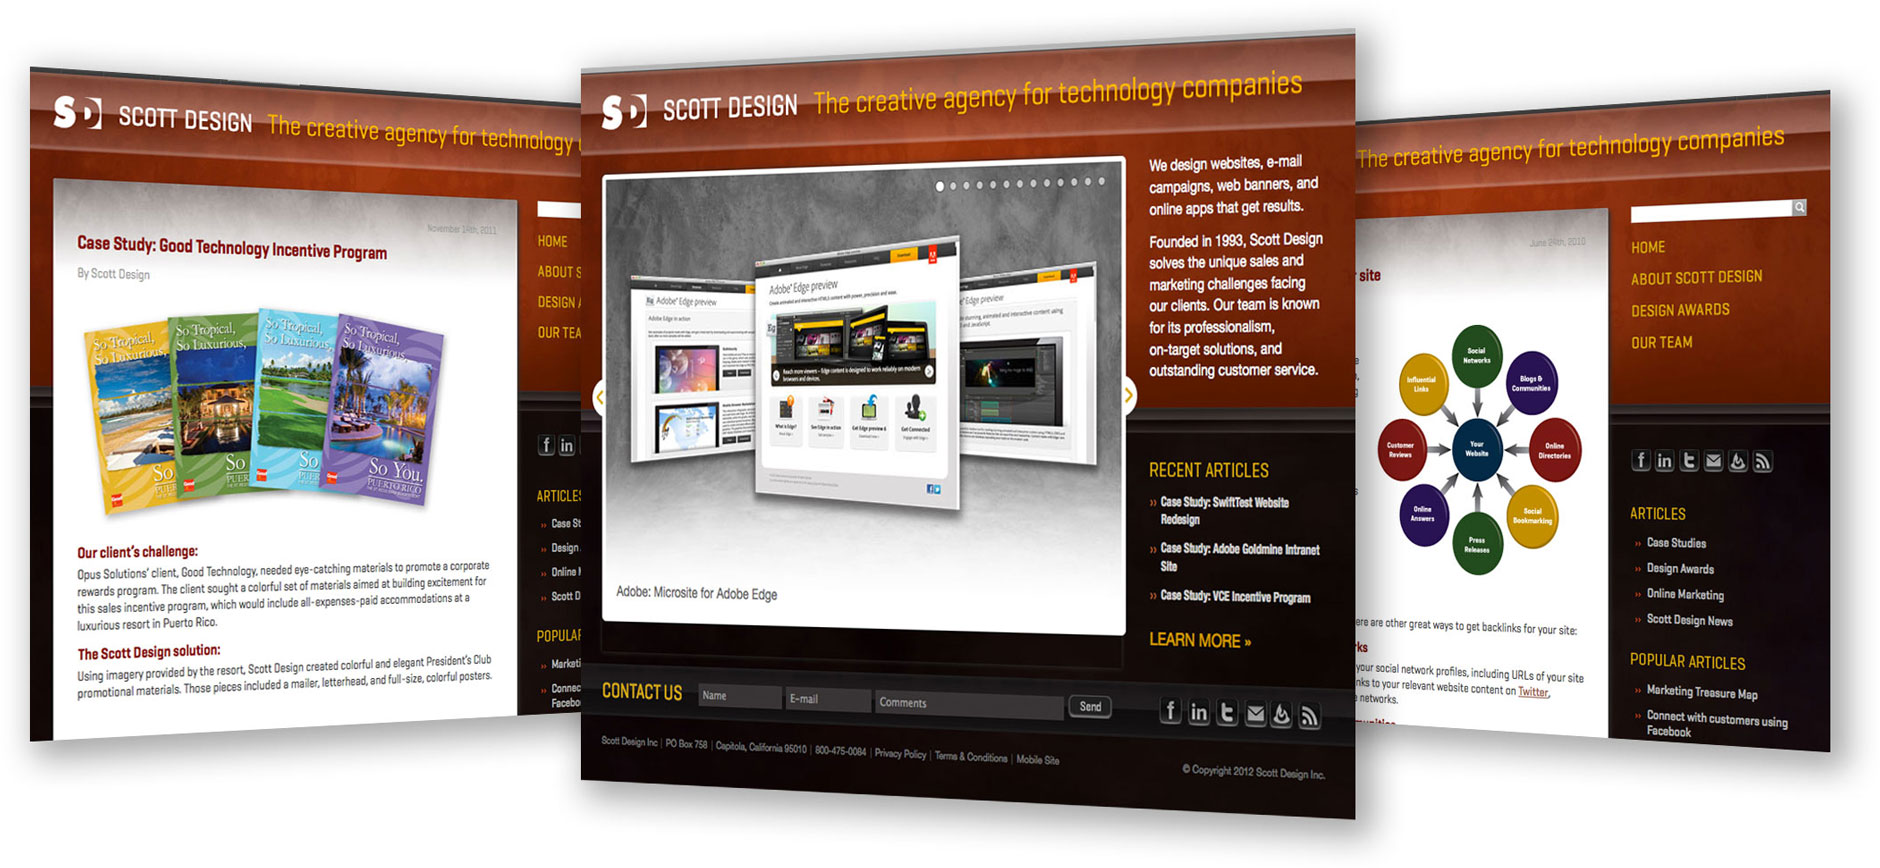 scott design website redesign